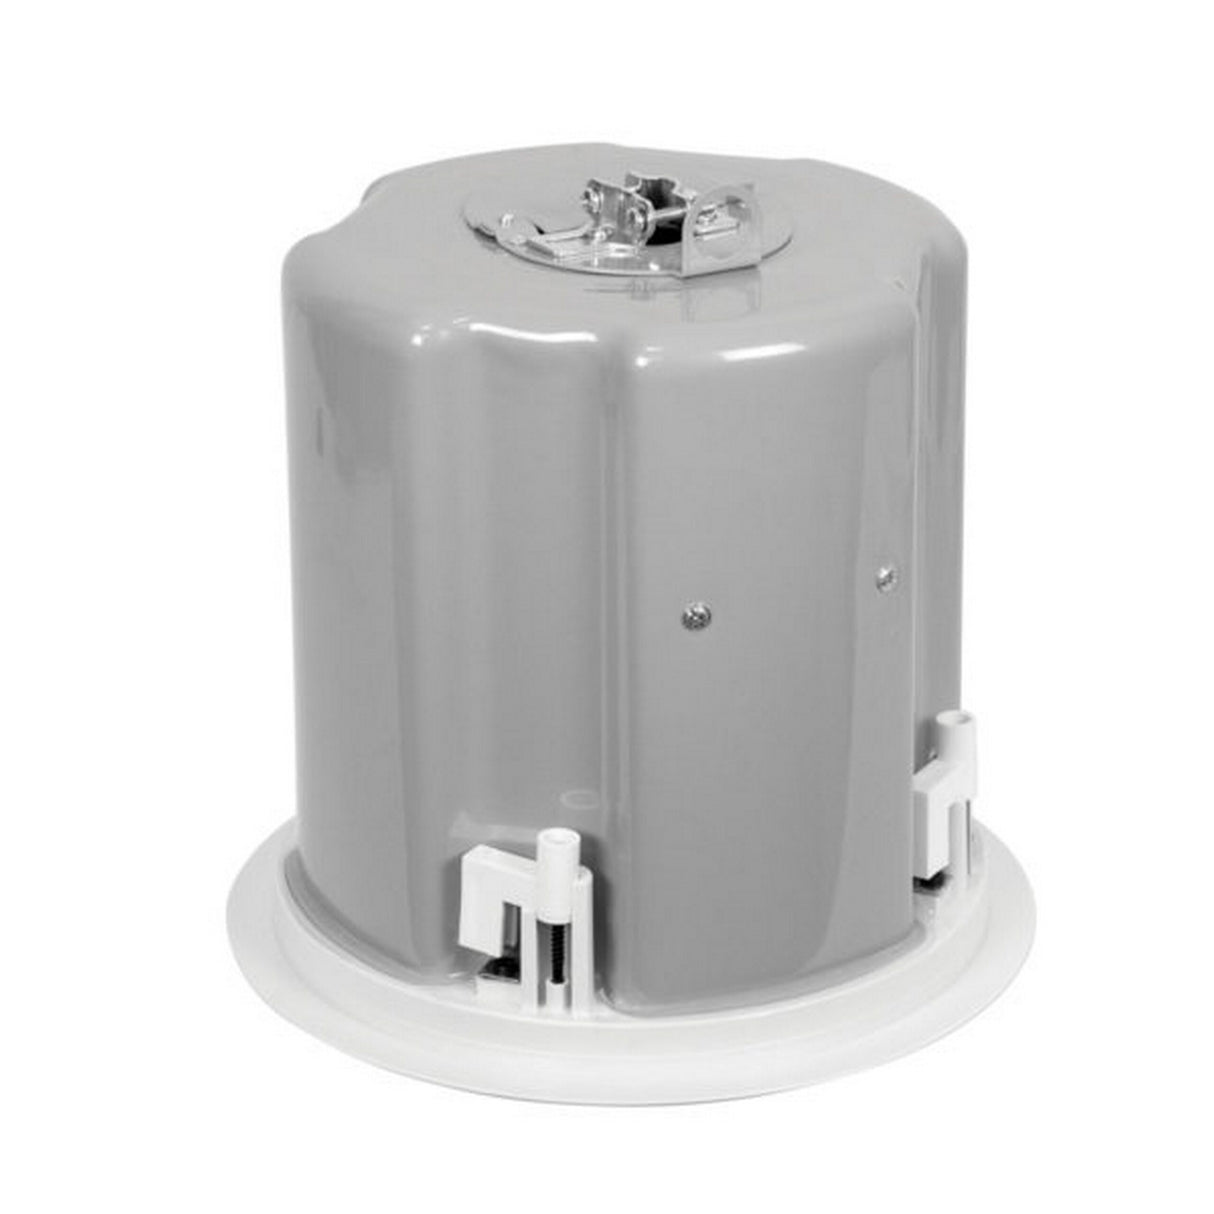 Lowell ES-62T 6-1/2 Inch Coaxial Ceiling Speaker, Single Unit